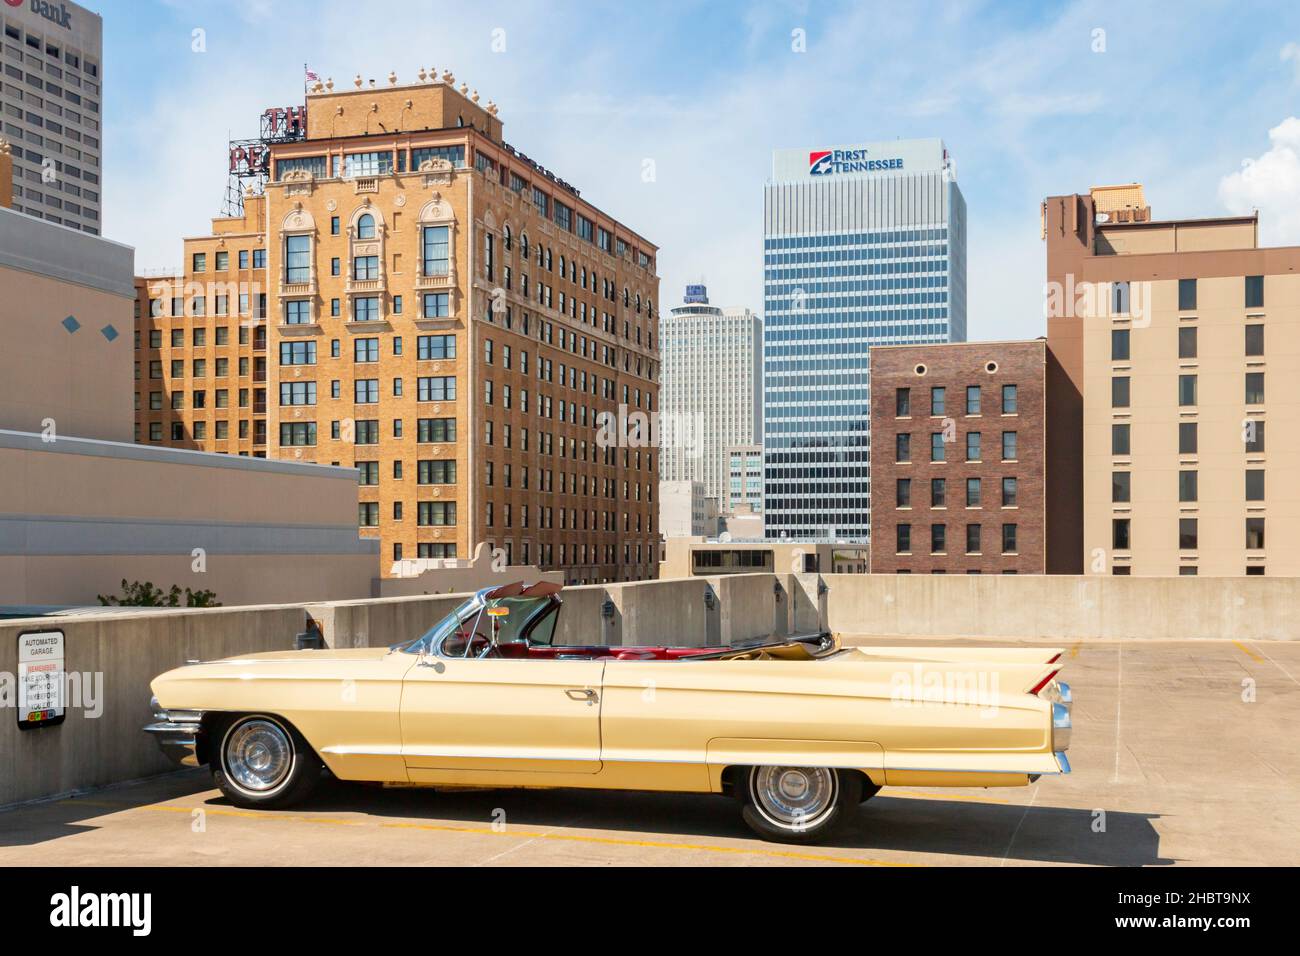 cream coloured 1962 vintage Cadillac coupe de ville parked on a car park roof Stock Photo